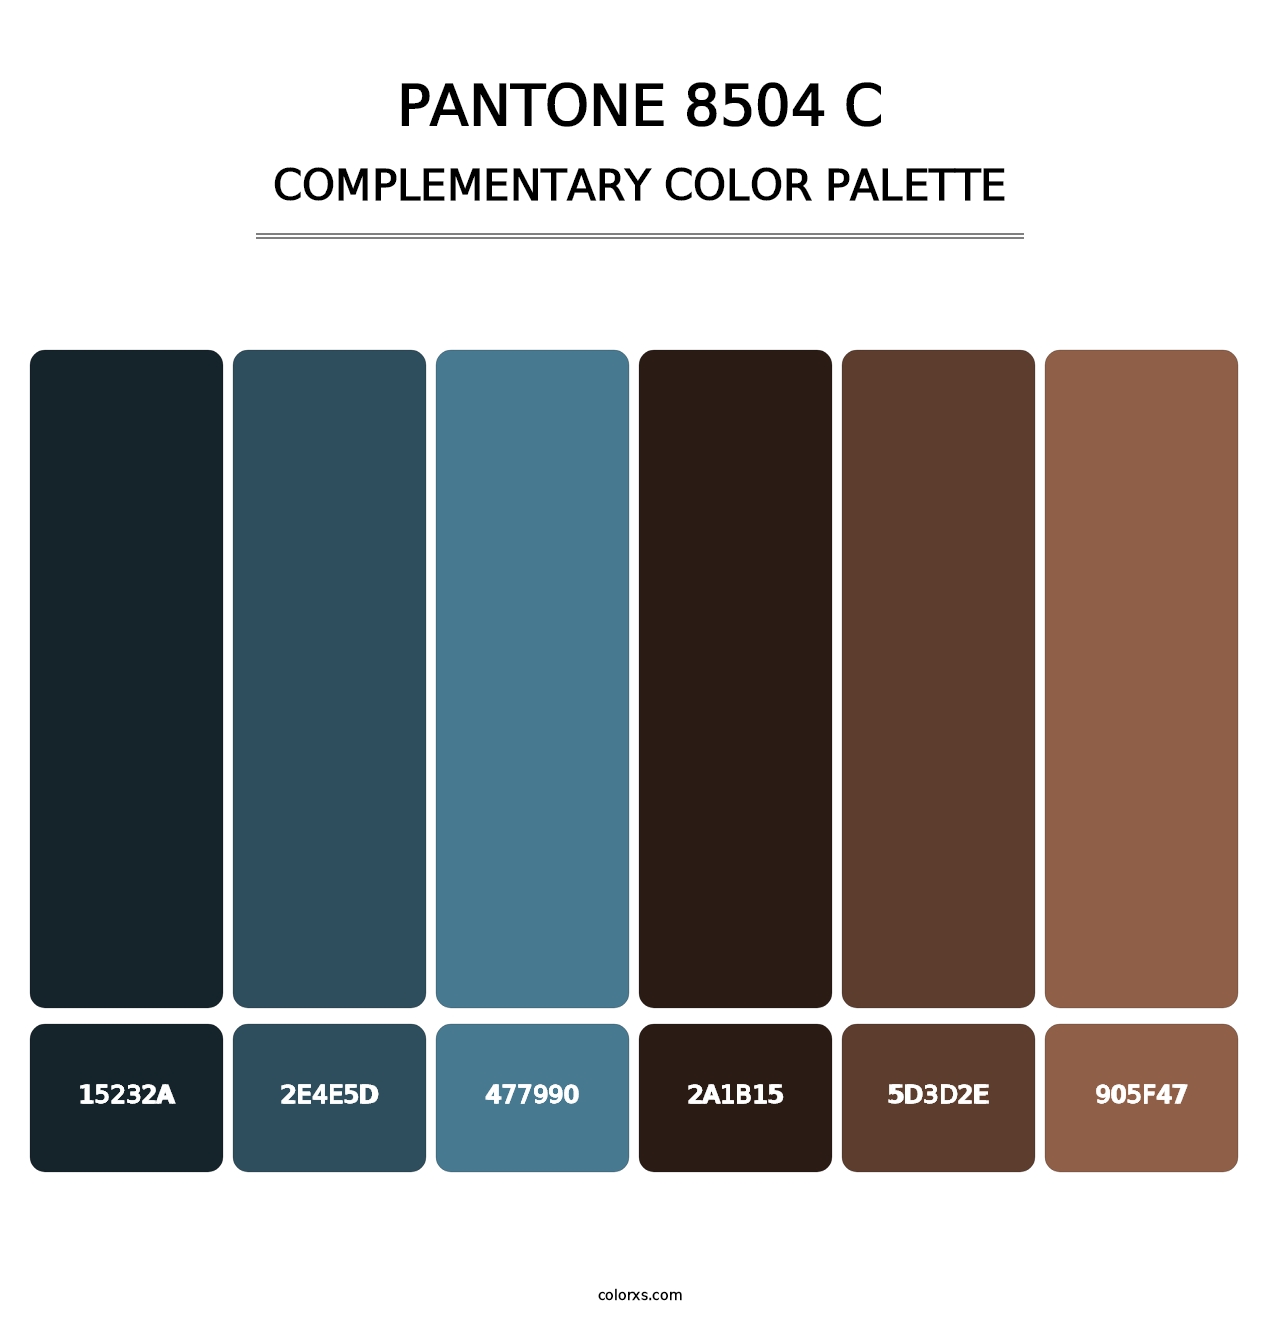 PANTONE 8504 C - Complementary Color Palette